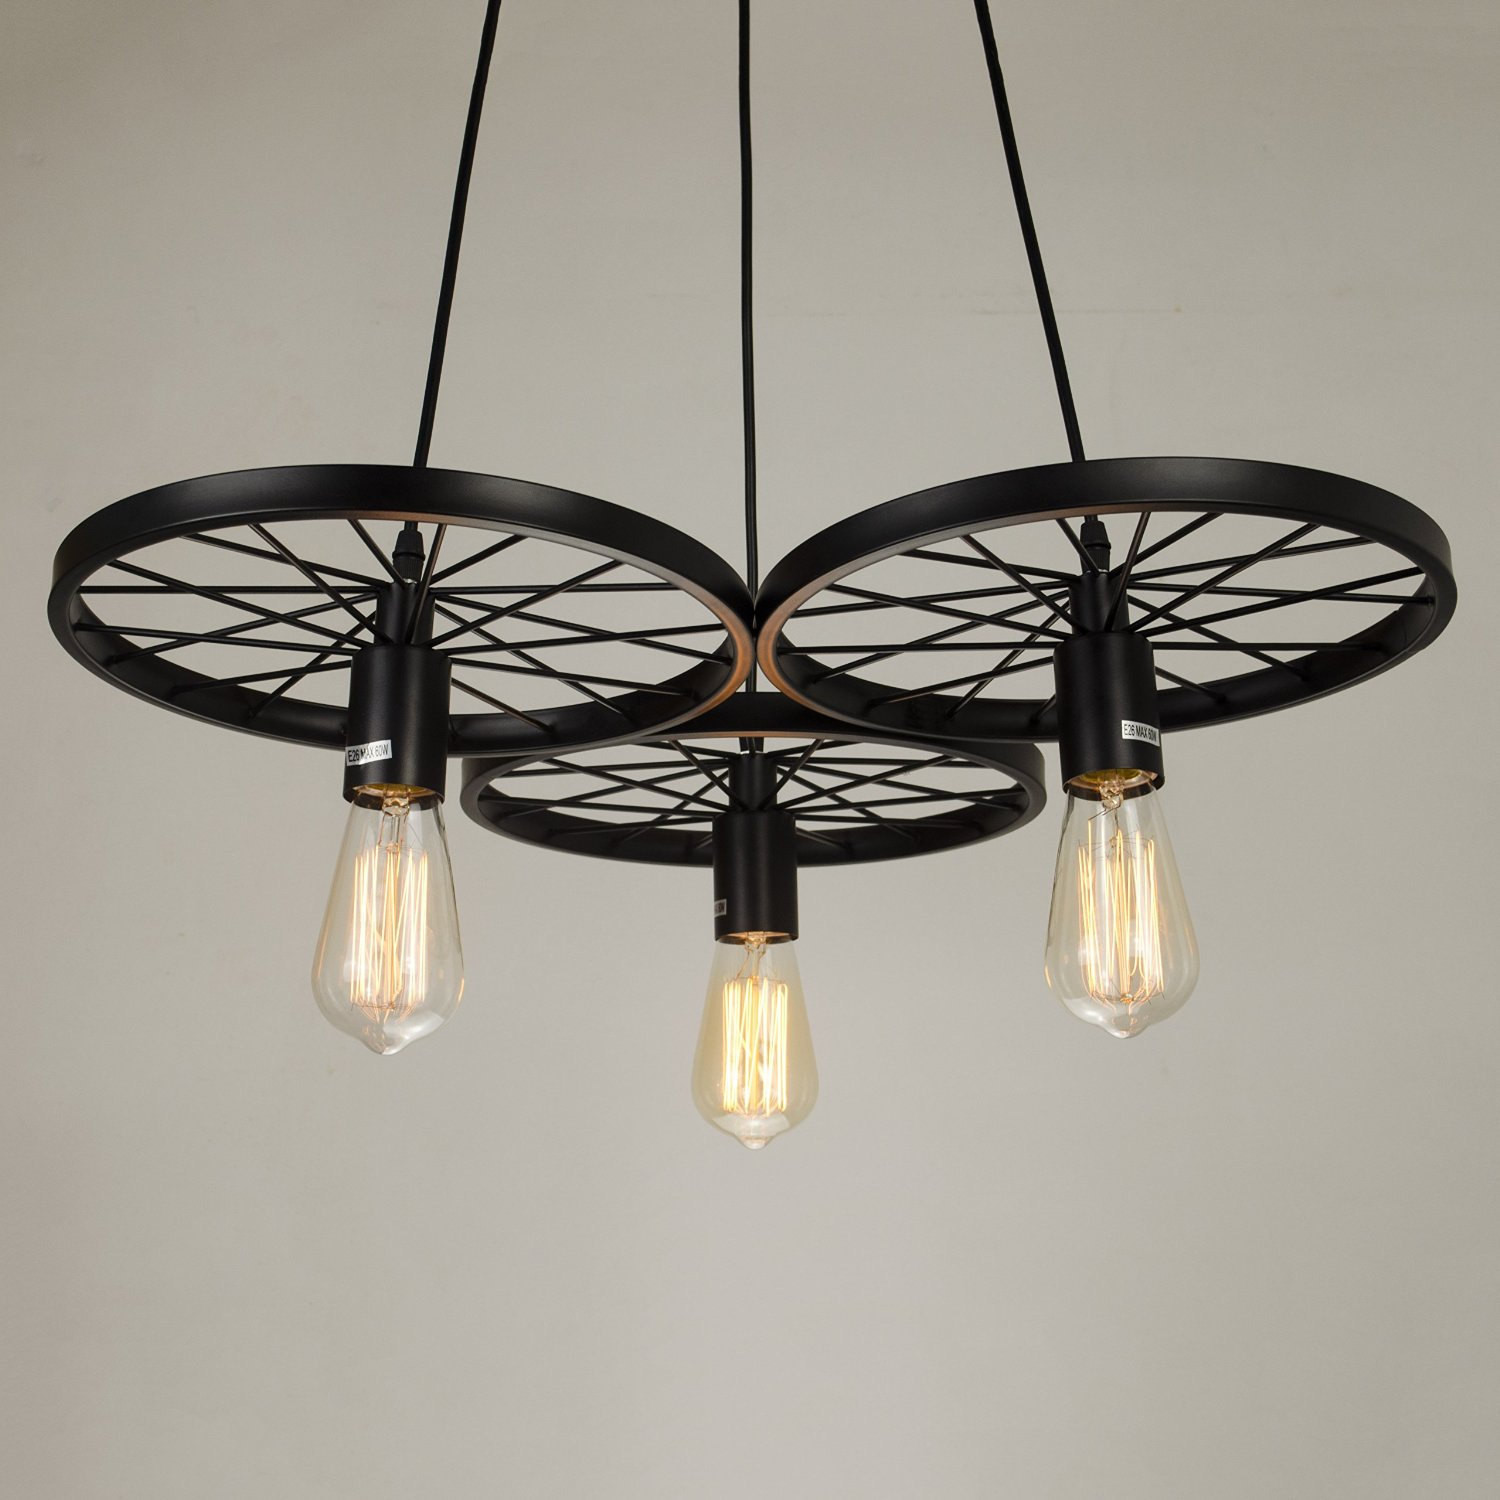 Edison Kitchen Lighting
 Industrial style pendant light 3 edison bulbs chandelier